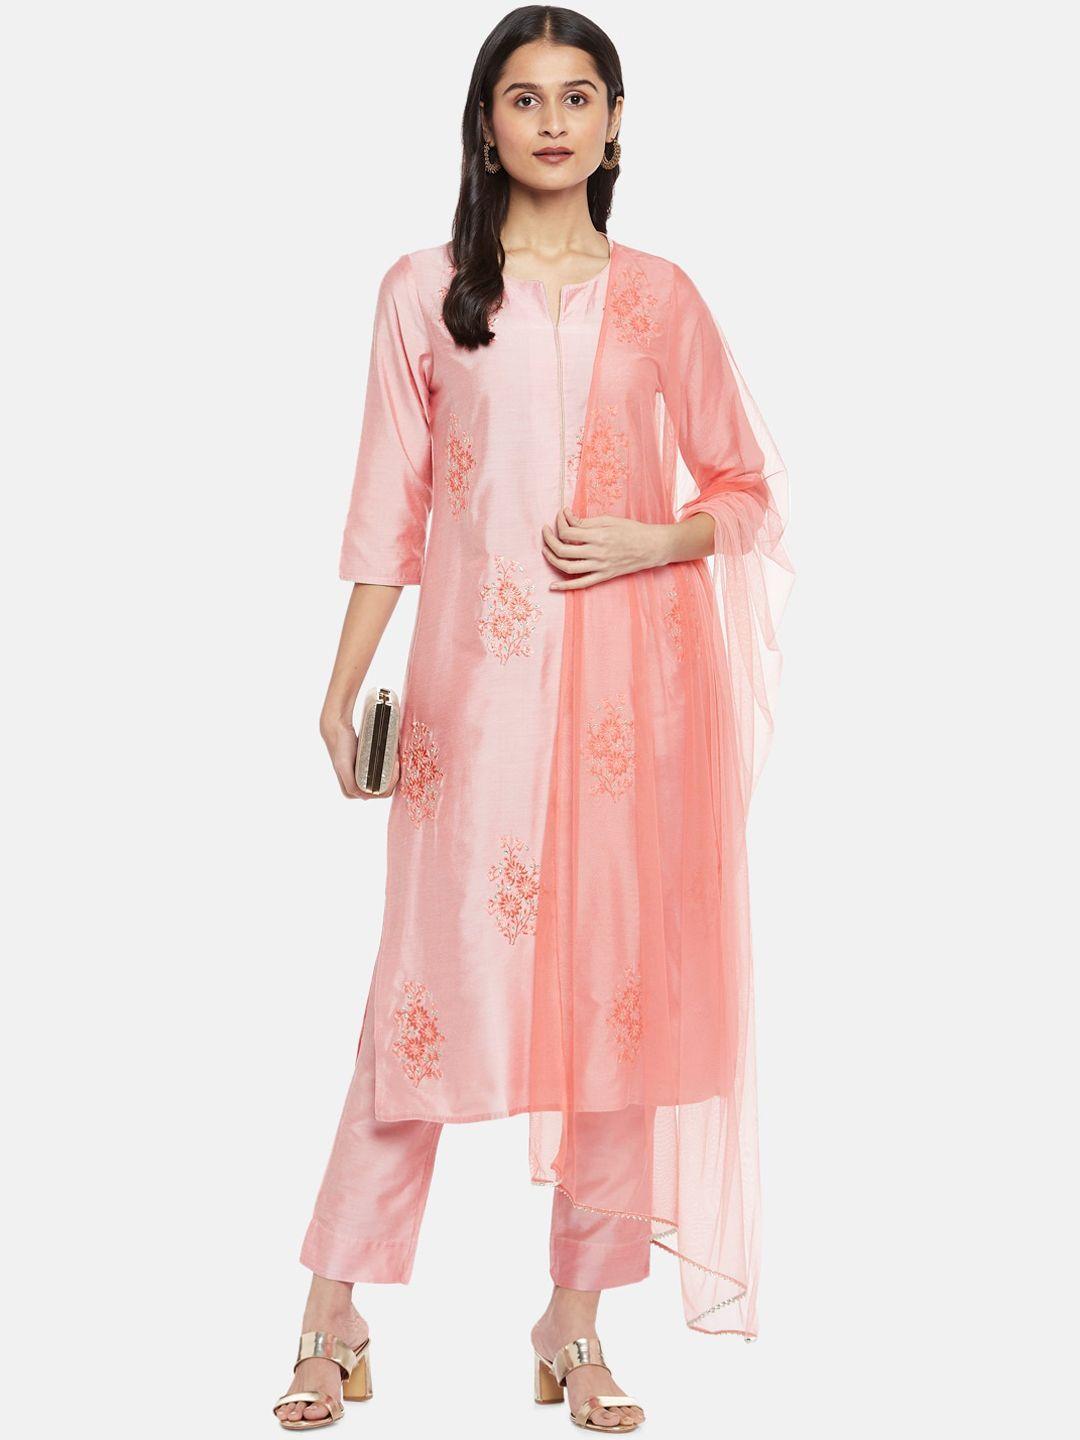 rangmanch by pantaloons women pink floral embroidered regular kurta sets with dupatta